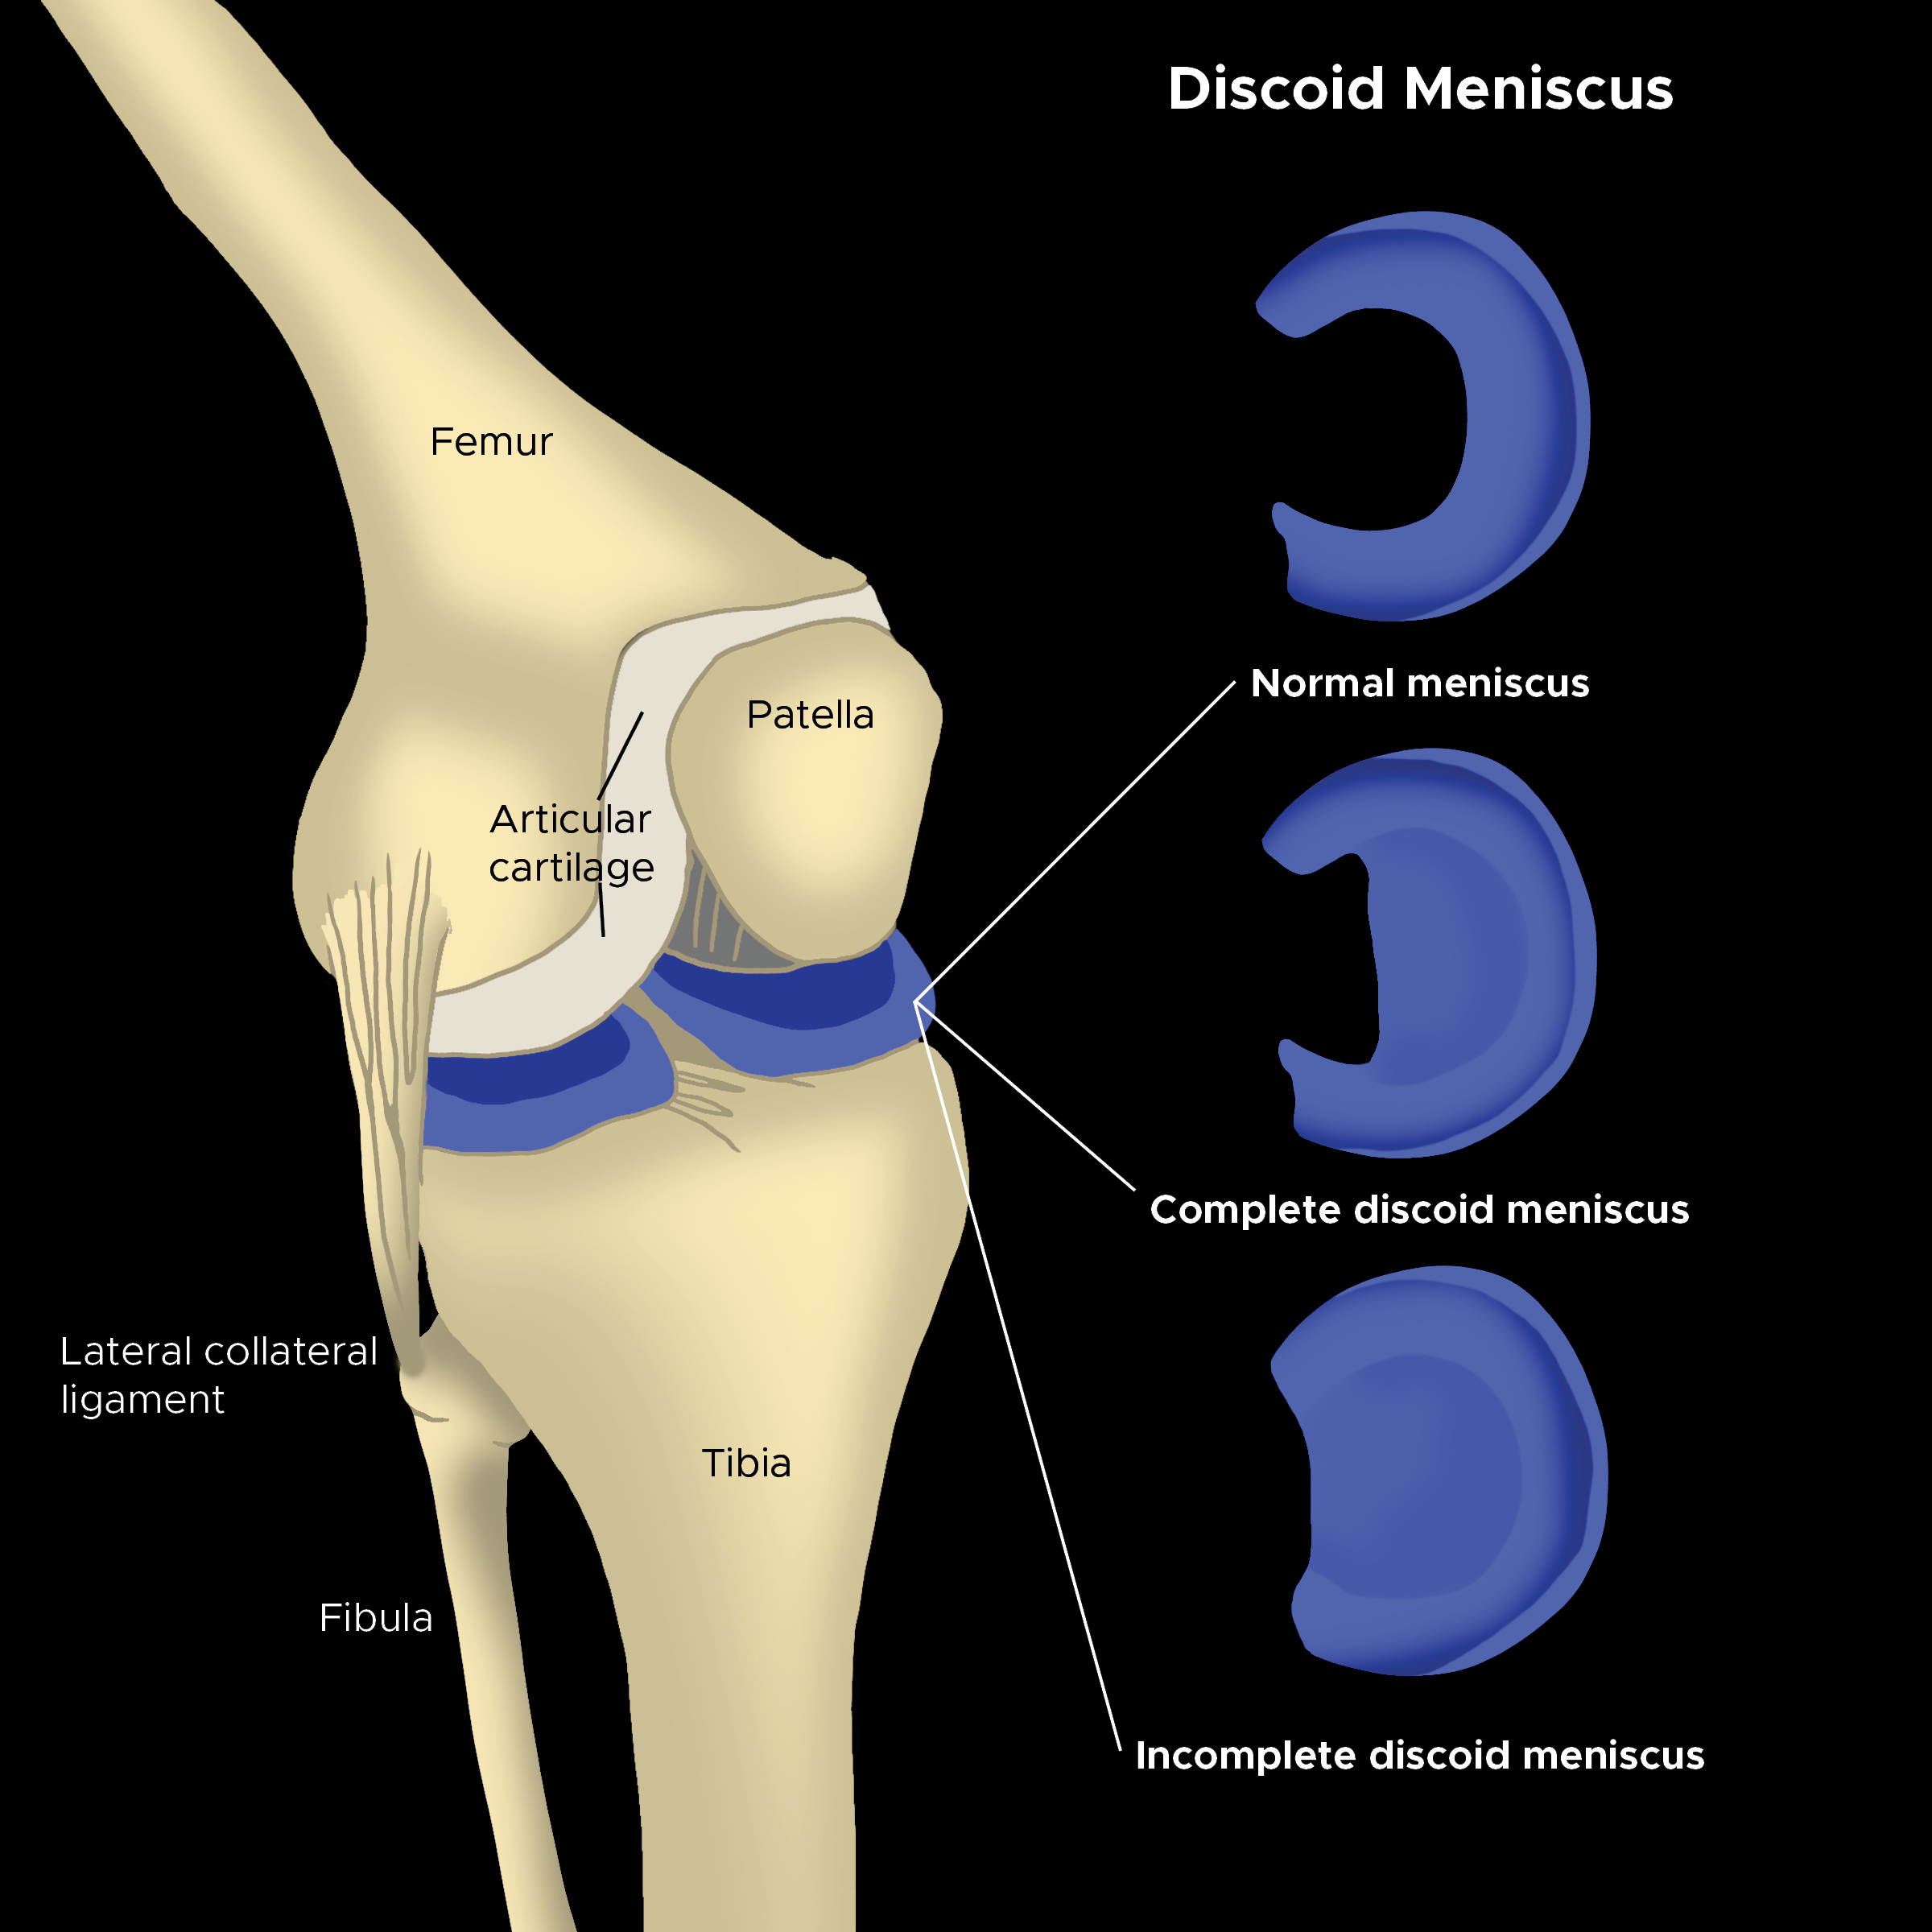 Illustration of discoid meniscus. Femur, patella, articular cartilage, tibia, lateral colateral ligament, fibula